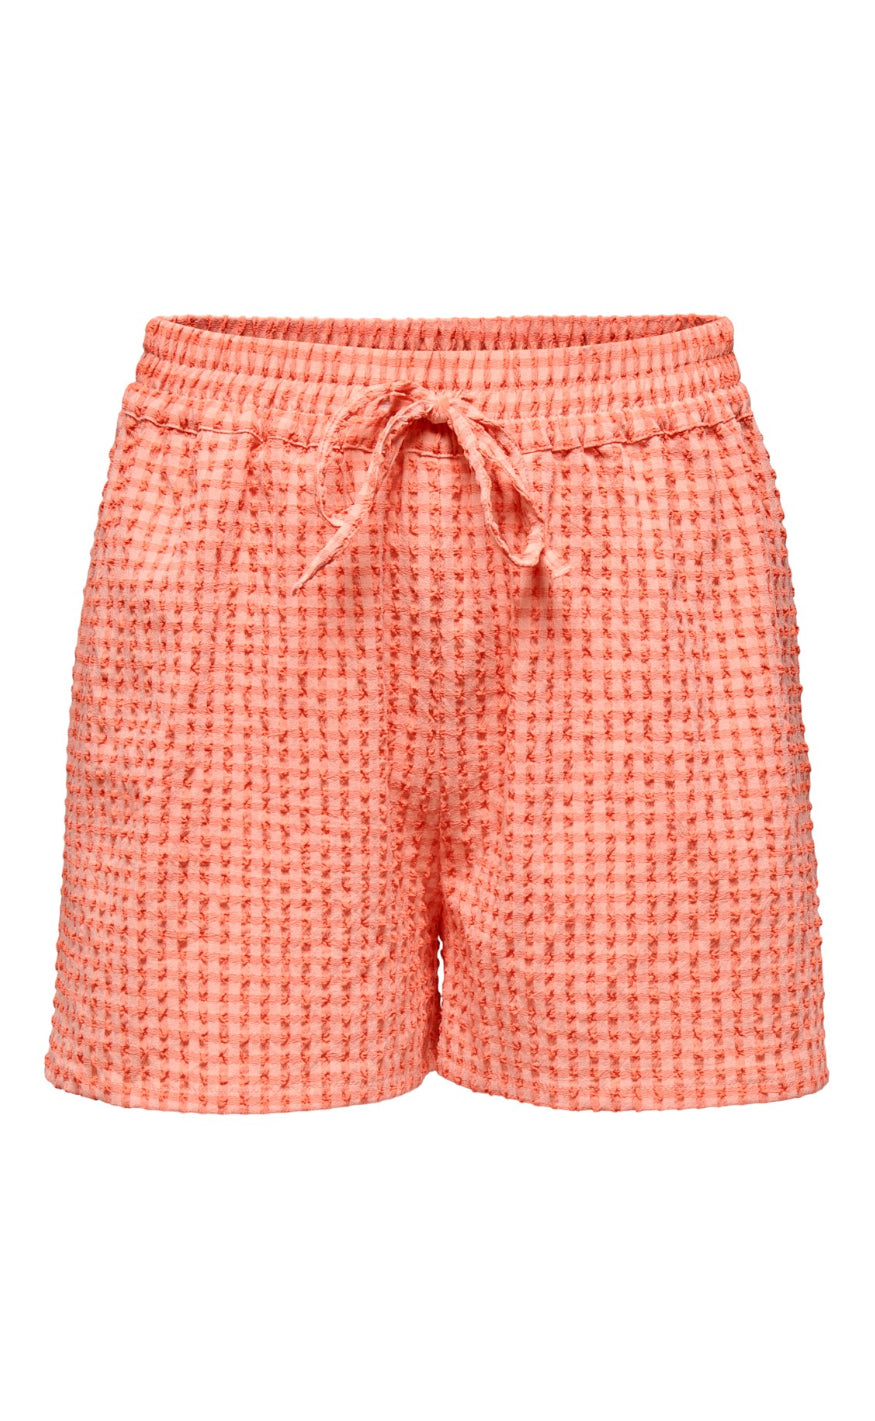 11: JDY Shorts - Milo - Coral Pink